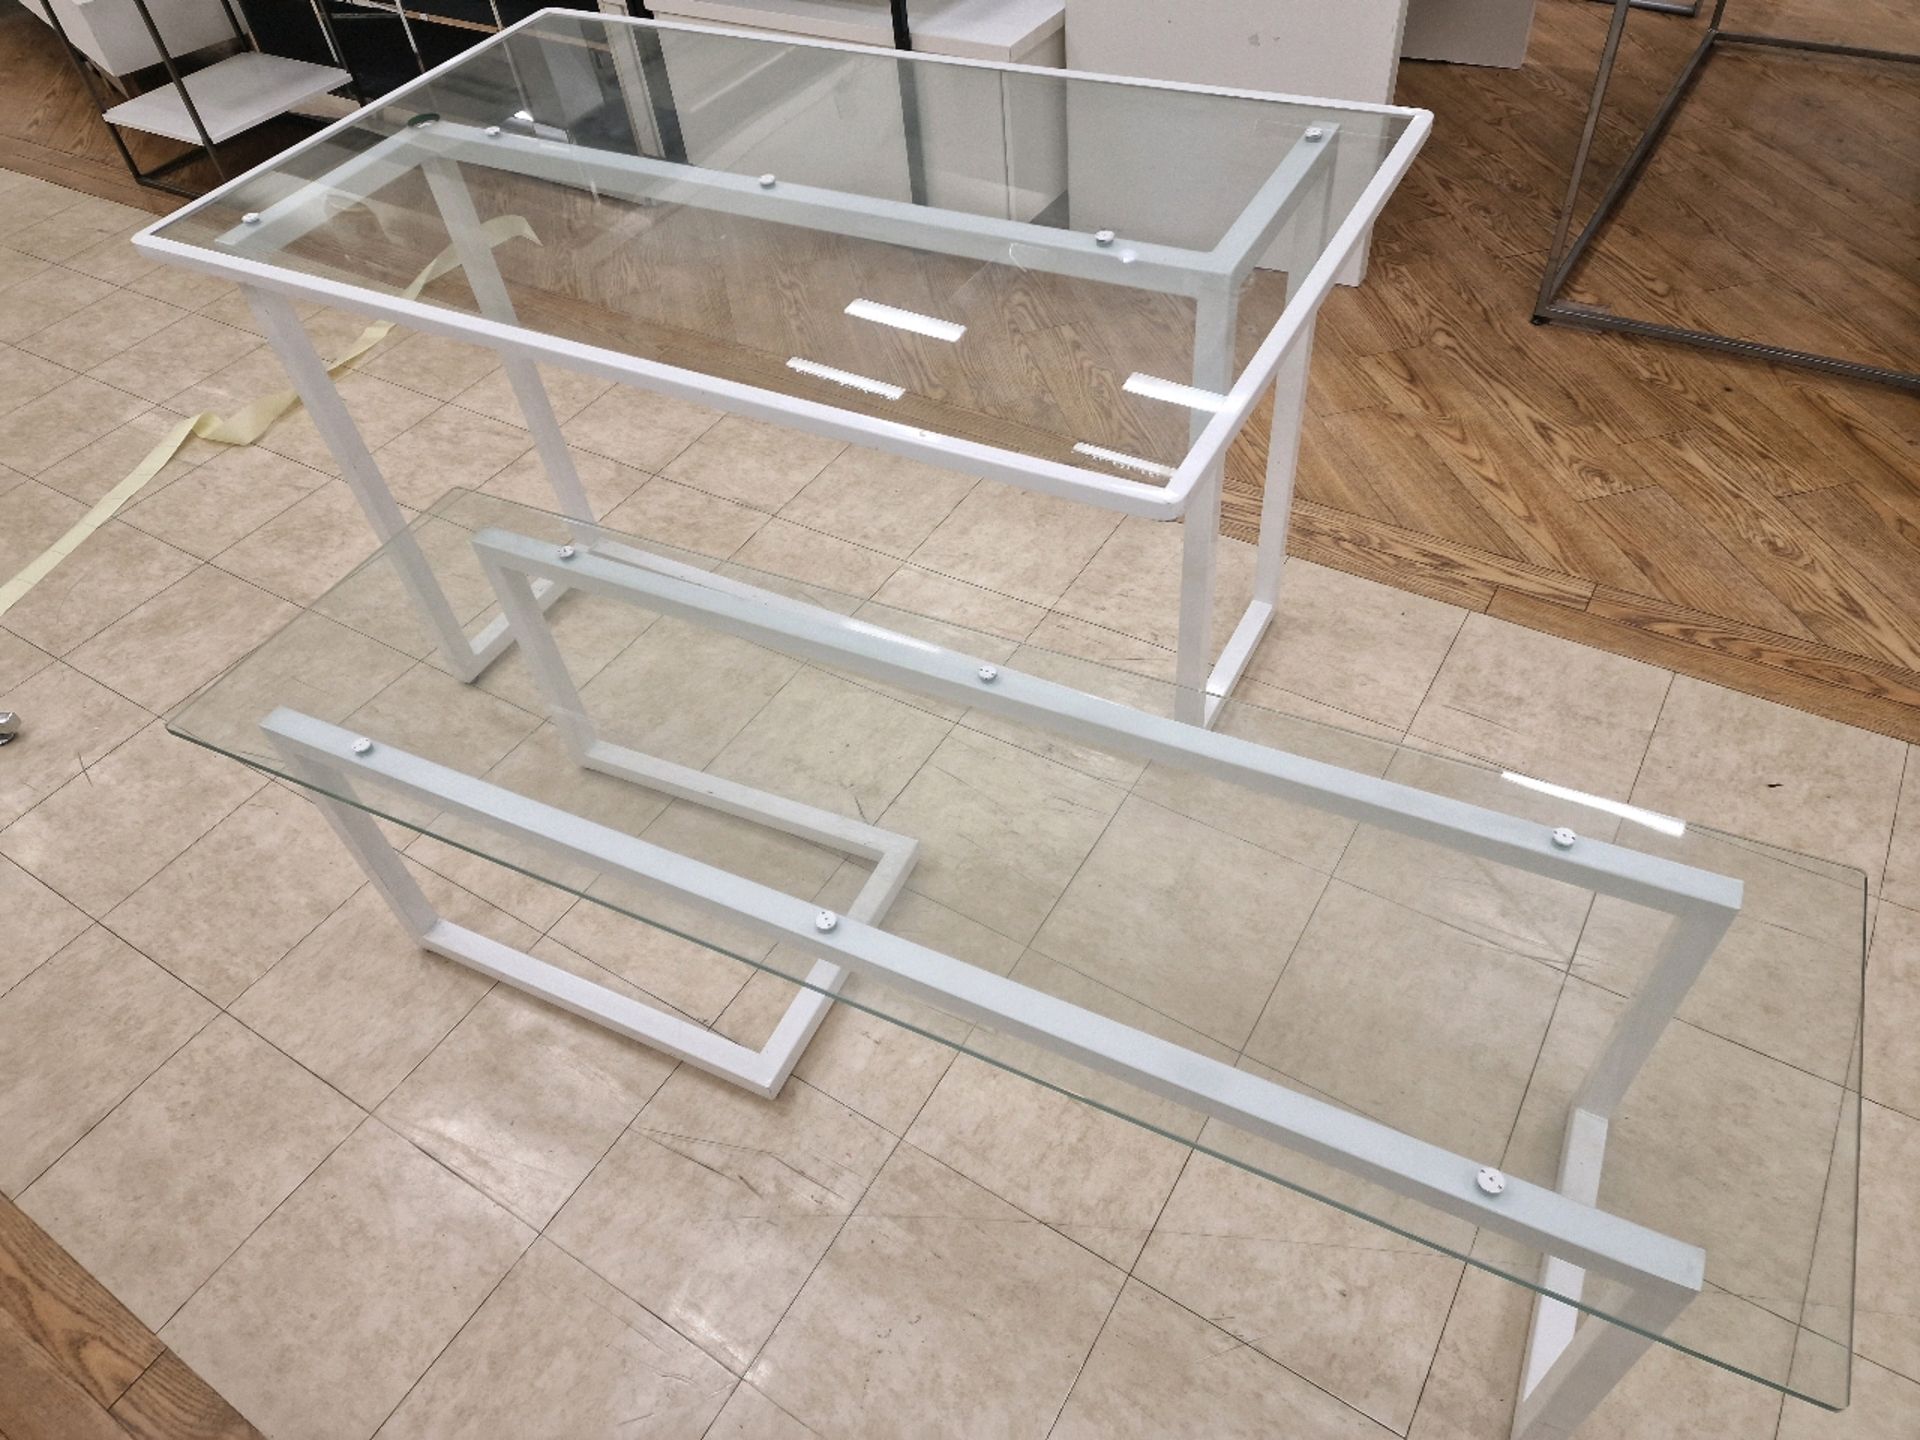 Set of Display Tables